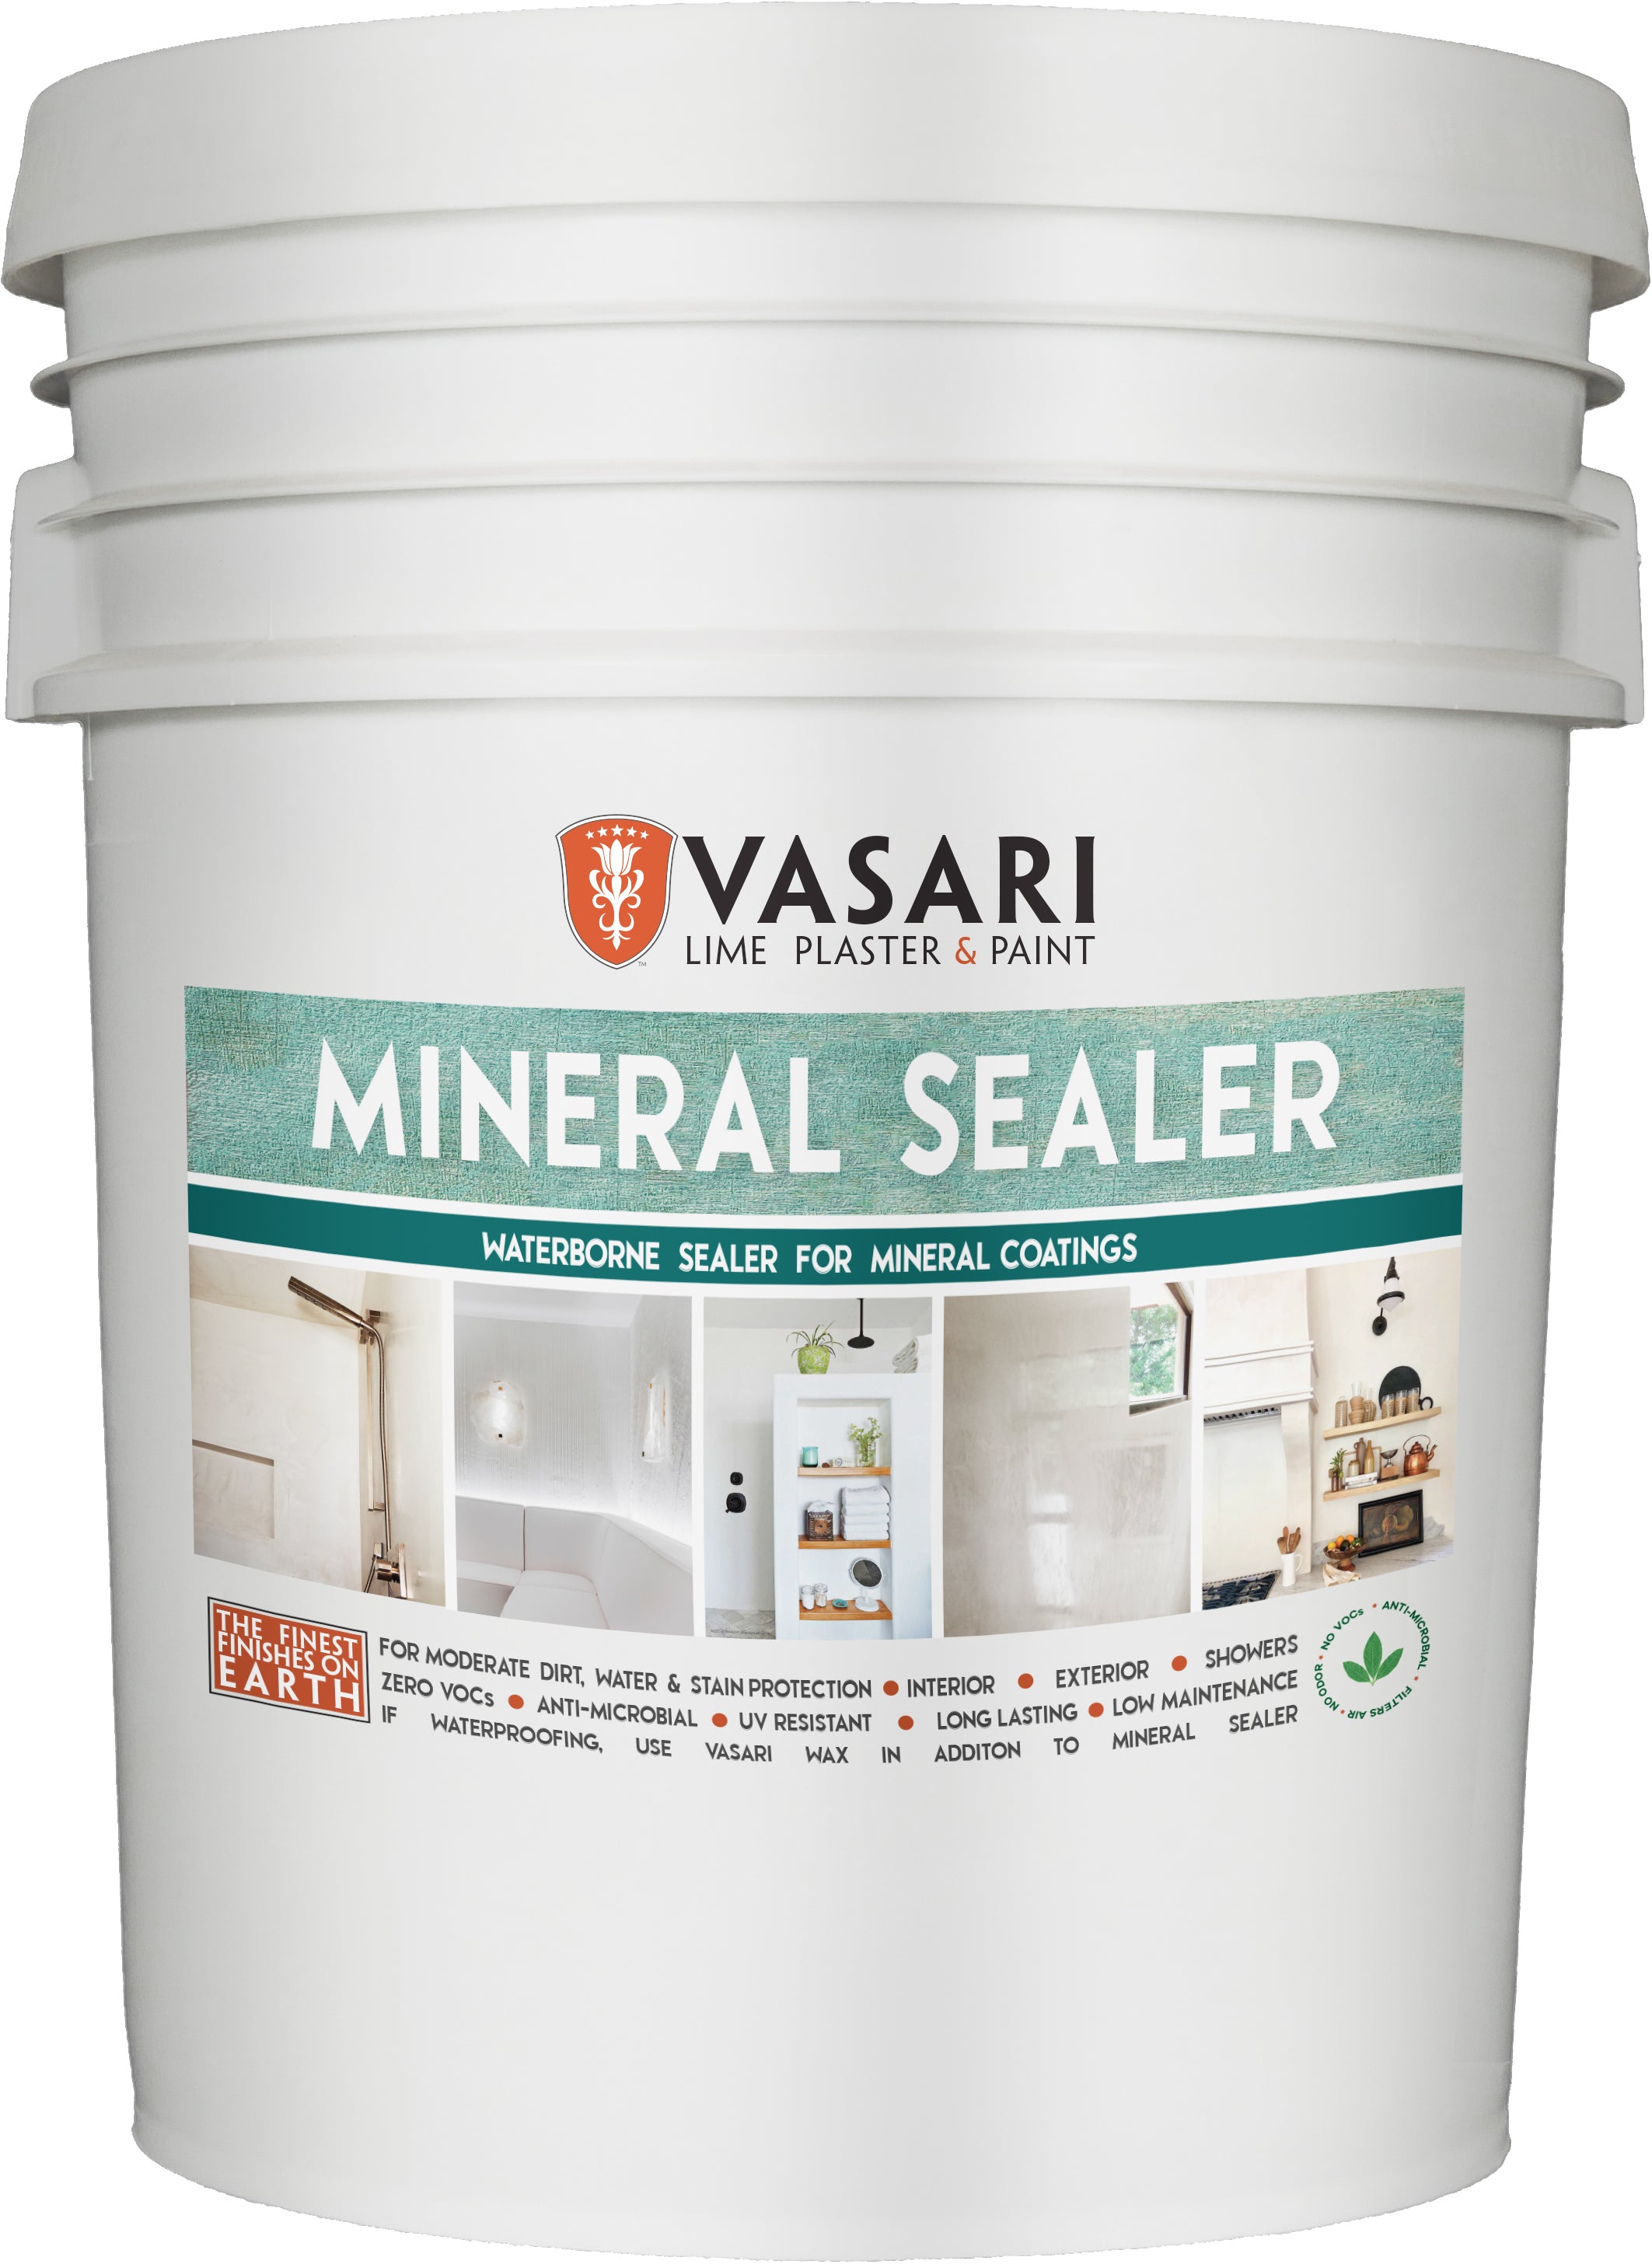 MINERAL SEALER - 5 GALLON  Vasari Lime Plaster & Paint